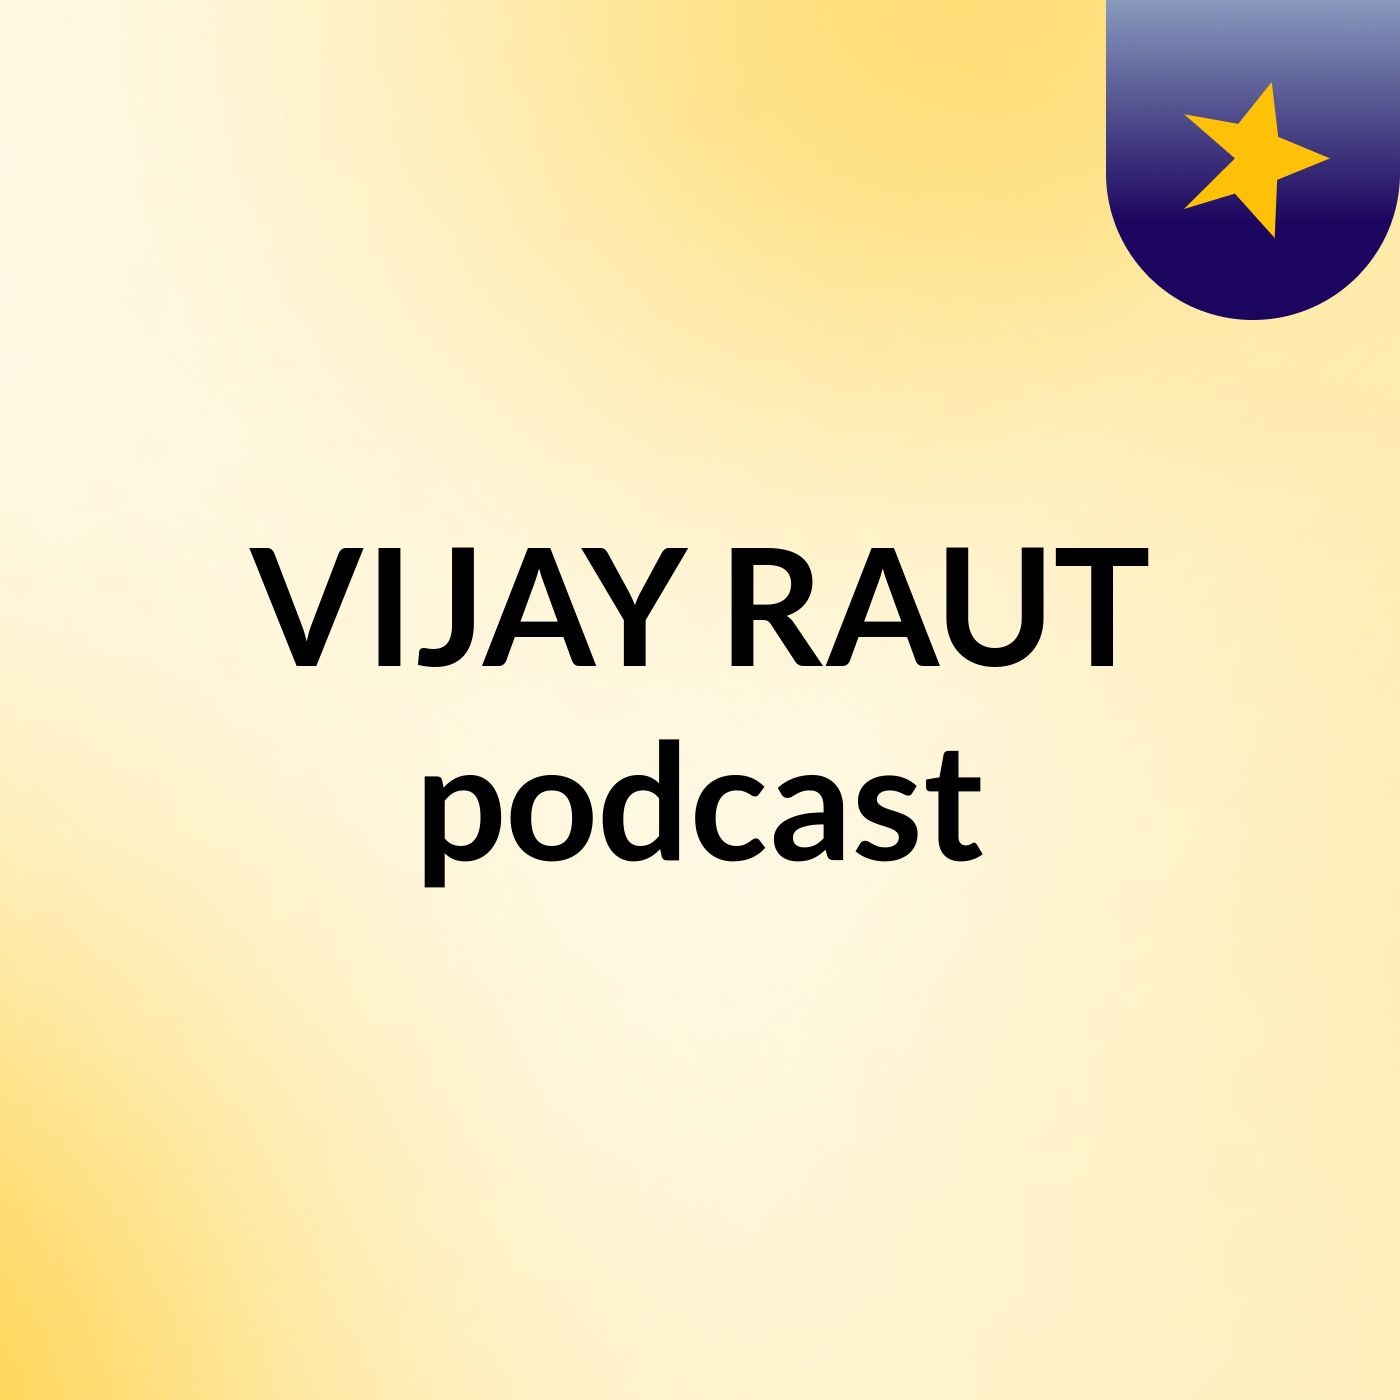 VIJAY RAUT podcast